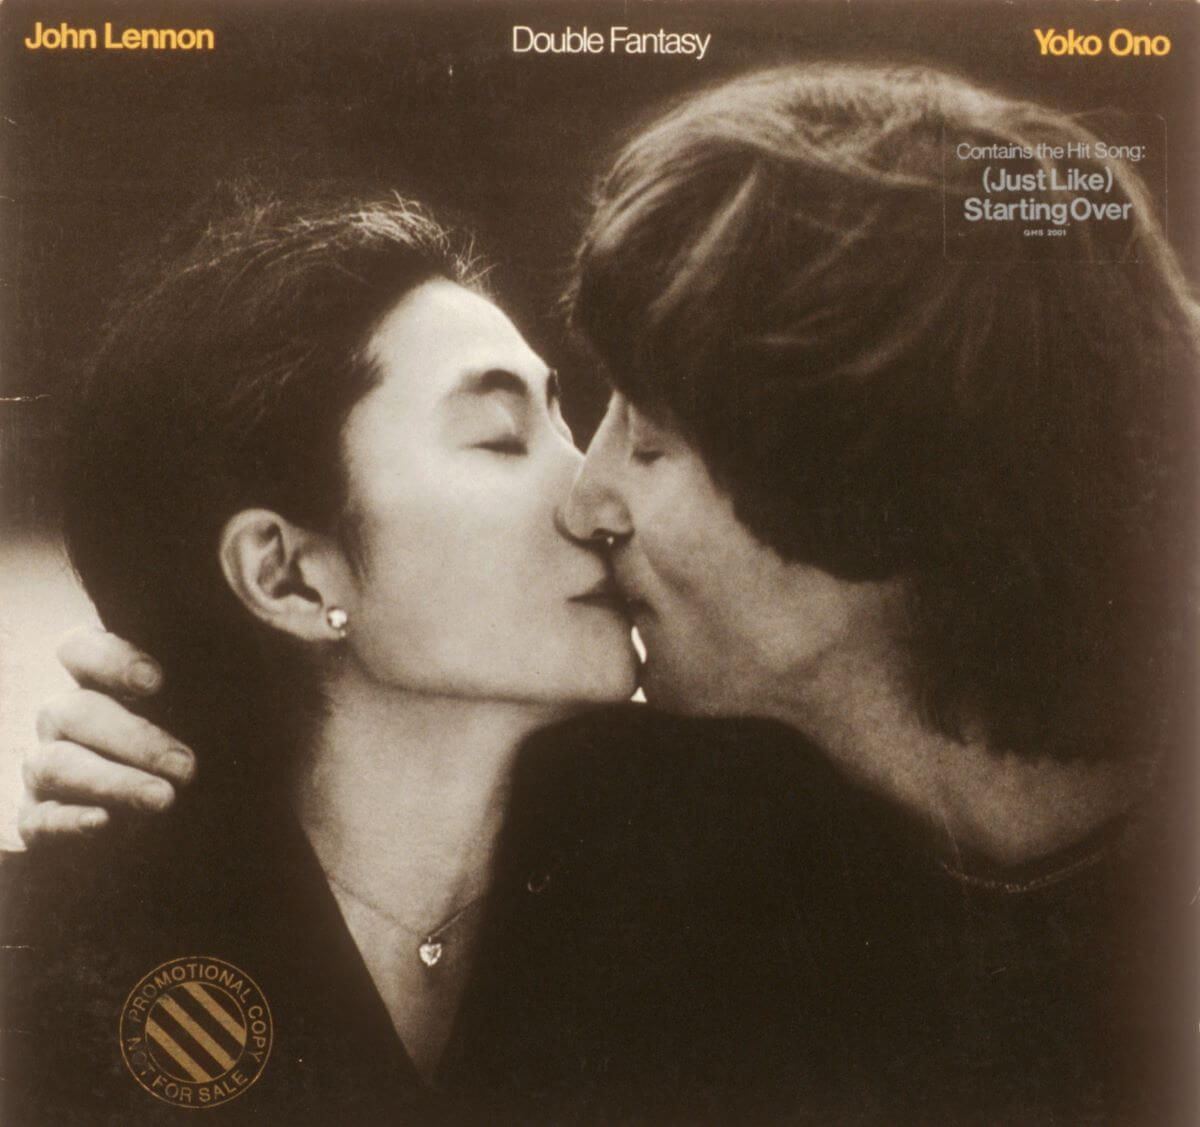 John Lennon and Yoko Ono kiss on the cover of the 'Double Fantasy' album.